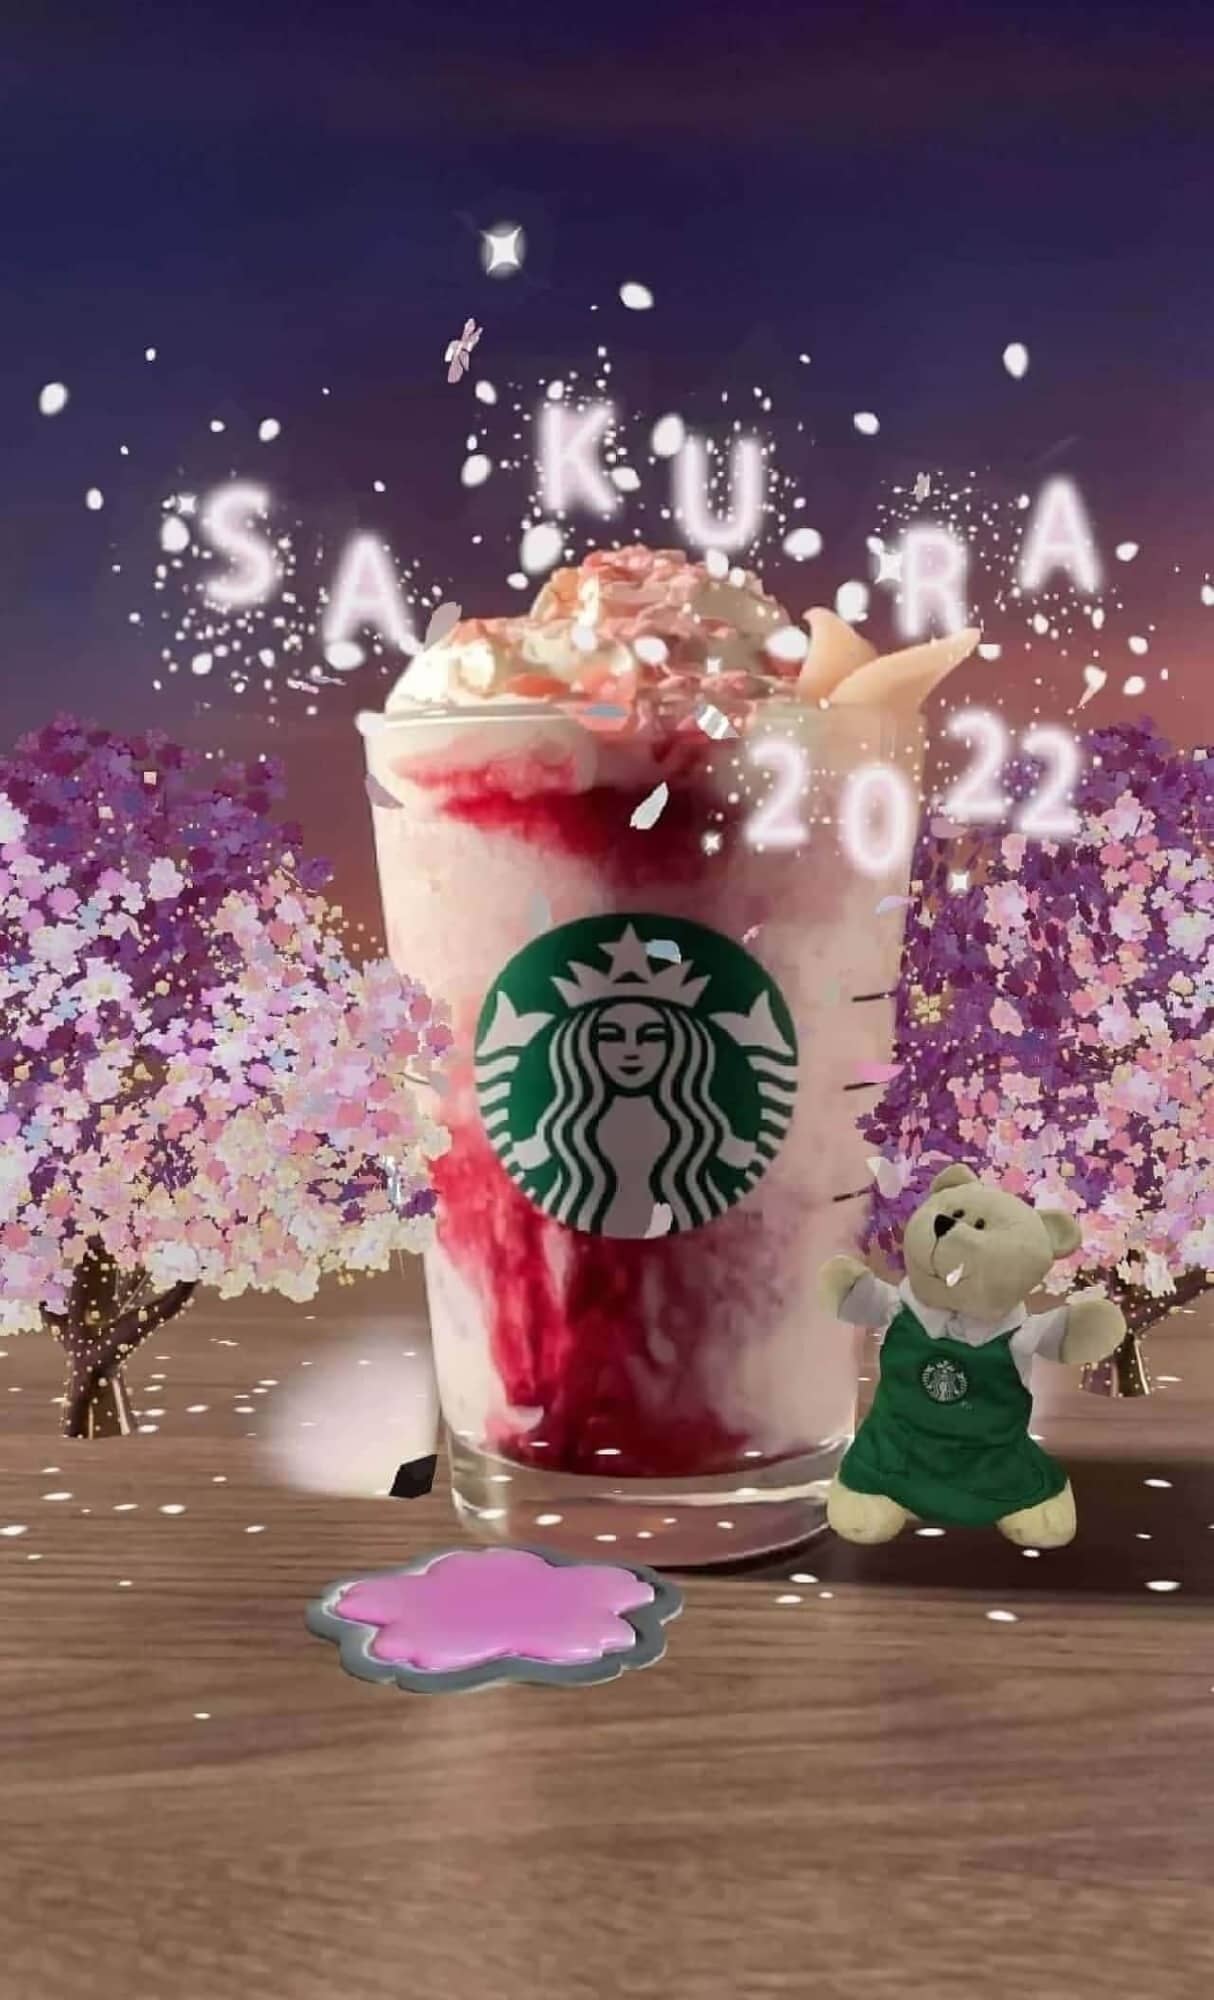 Starbucks' full-blown Sakura AR with nighttime cherry blossom design